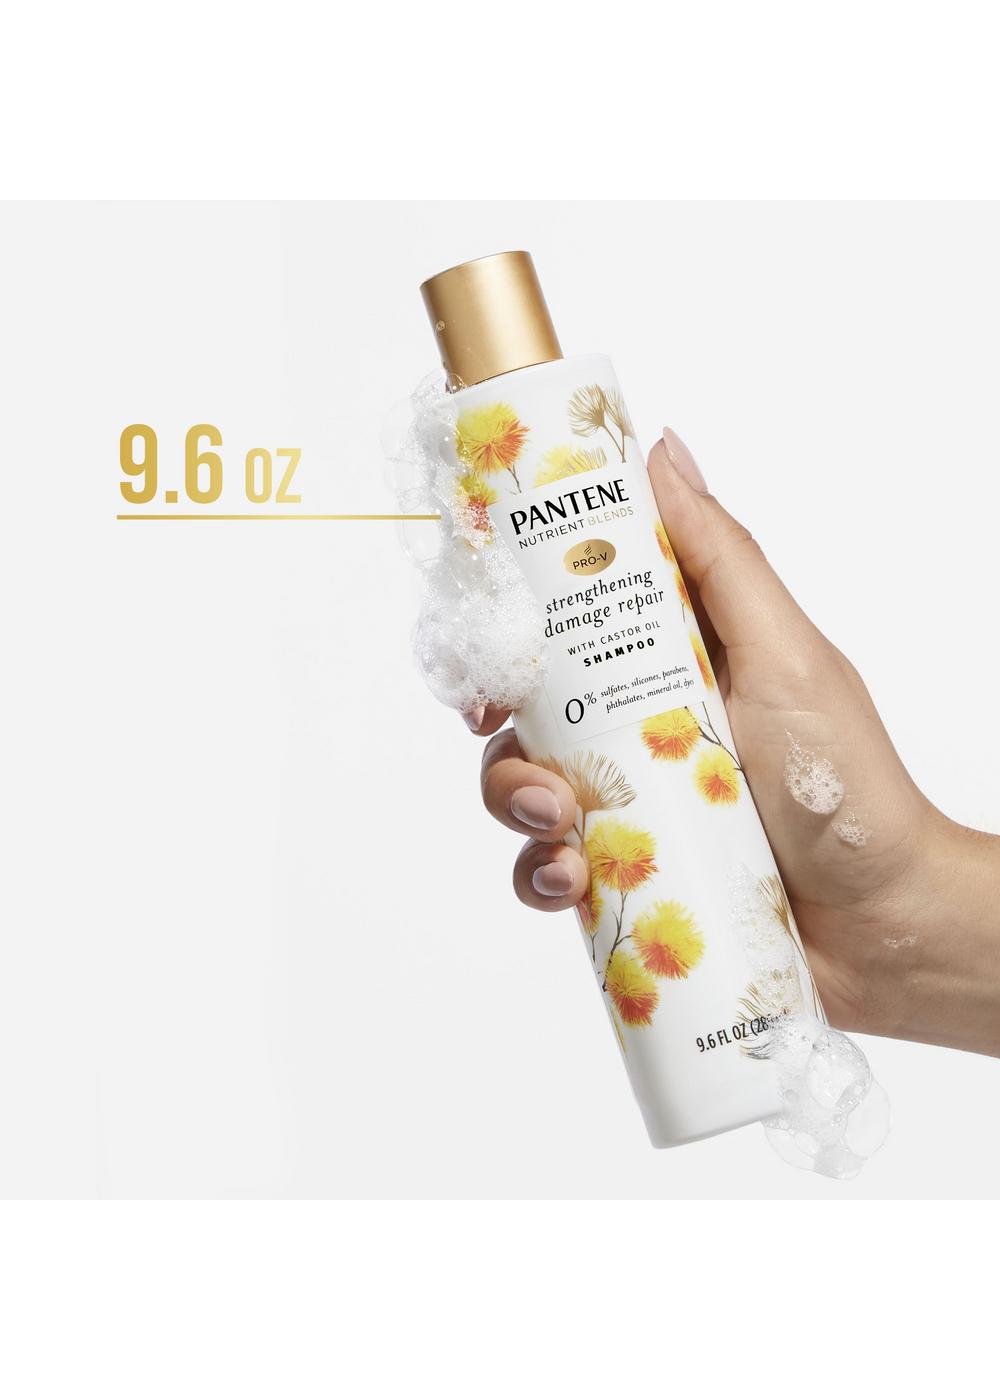 Pantene Nutrient Blends Strengthening Damage Repair Shampoo; image 2 of 16